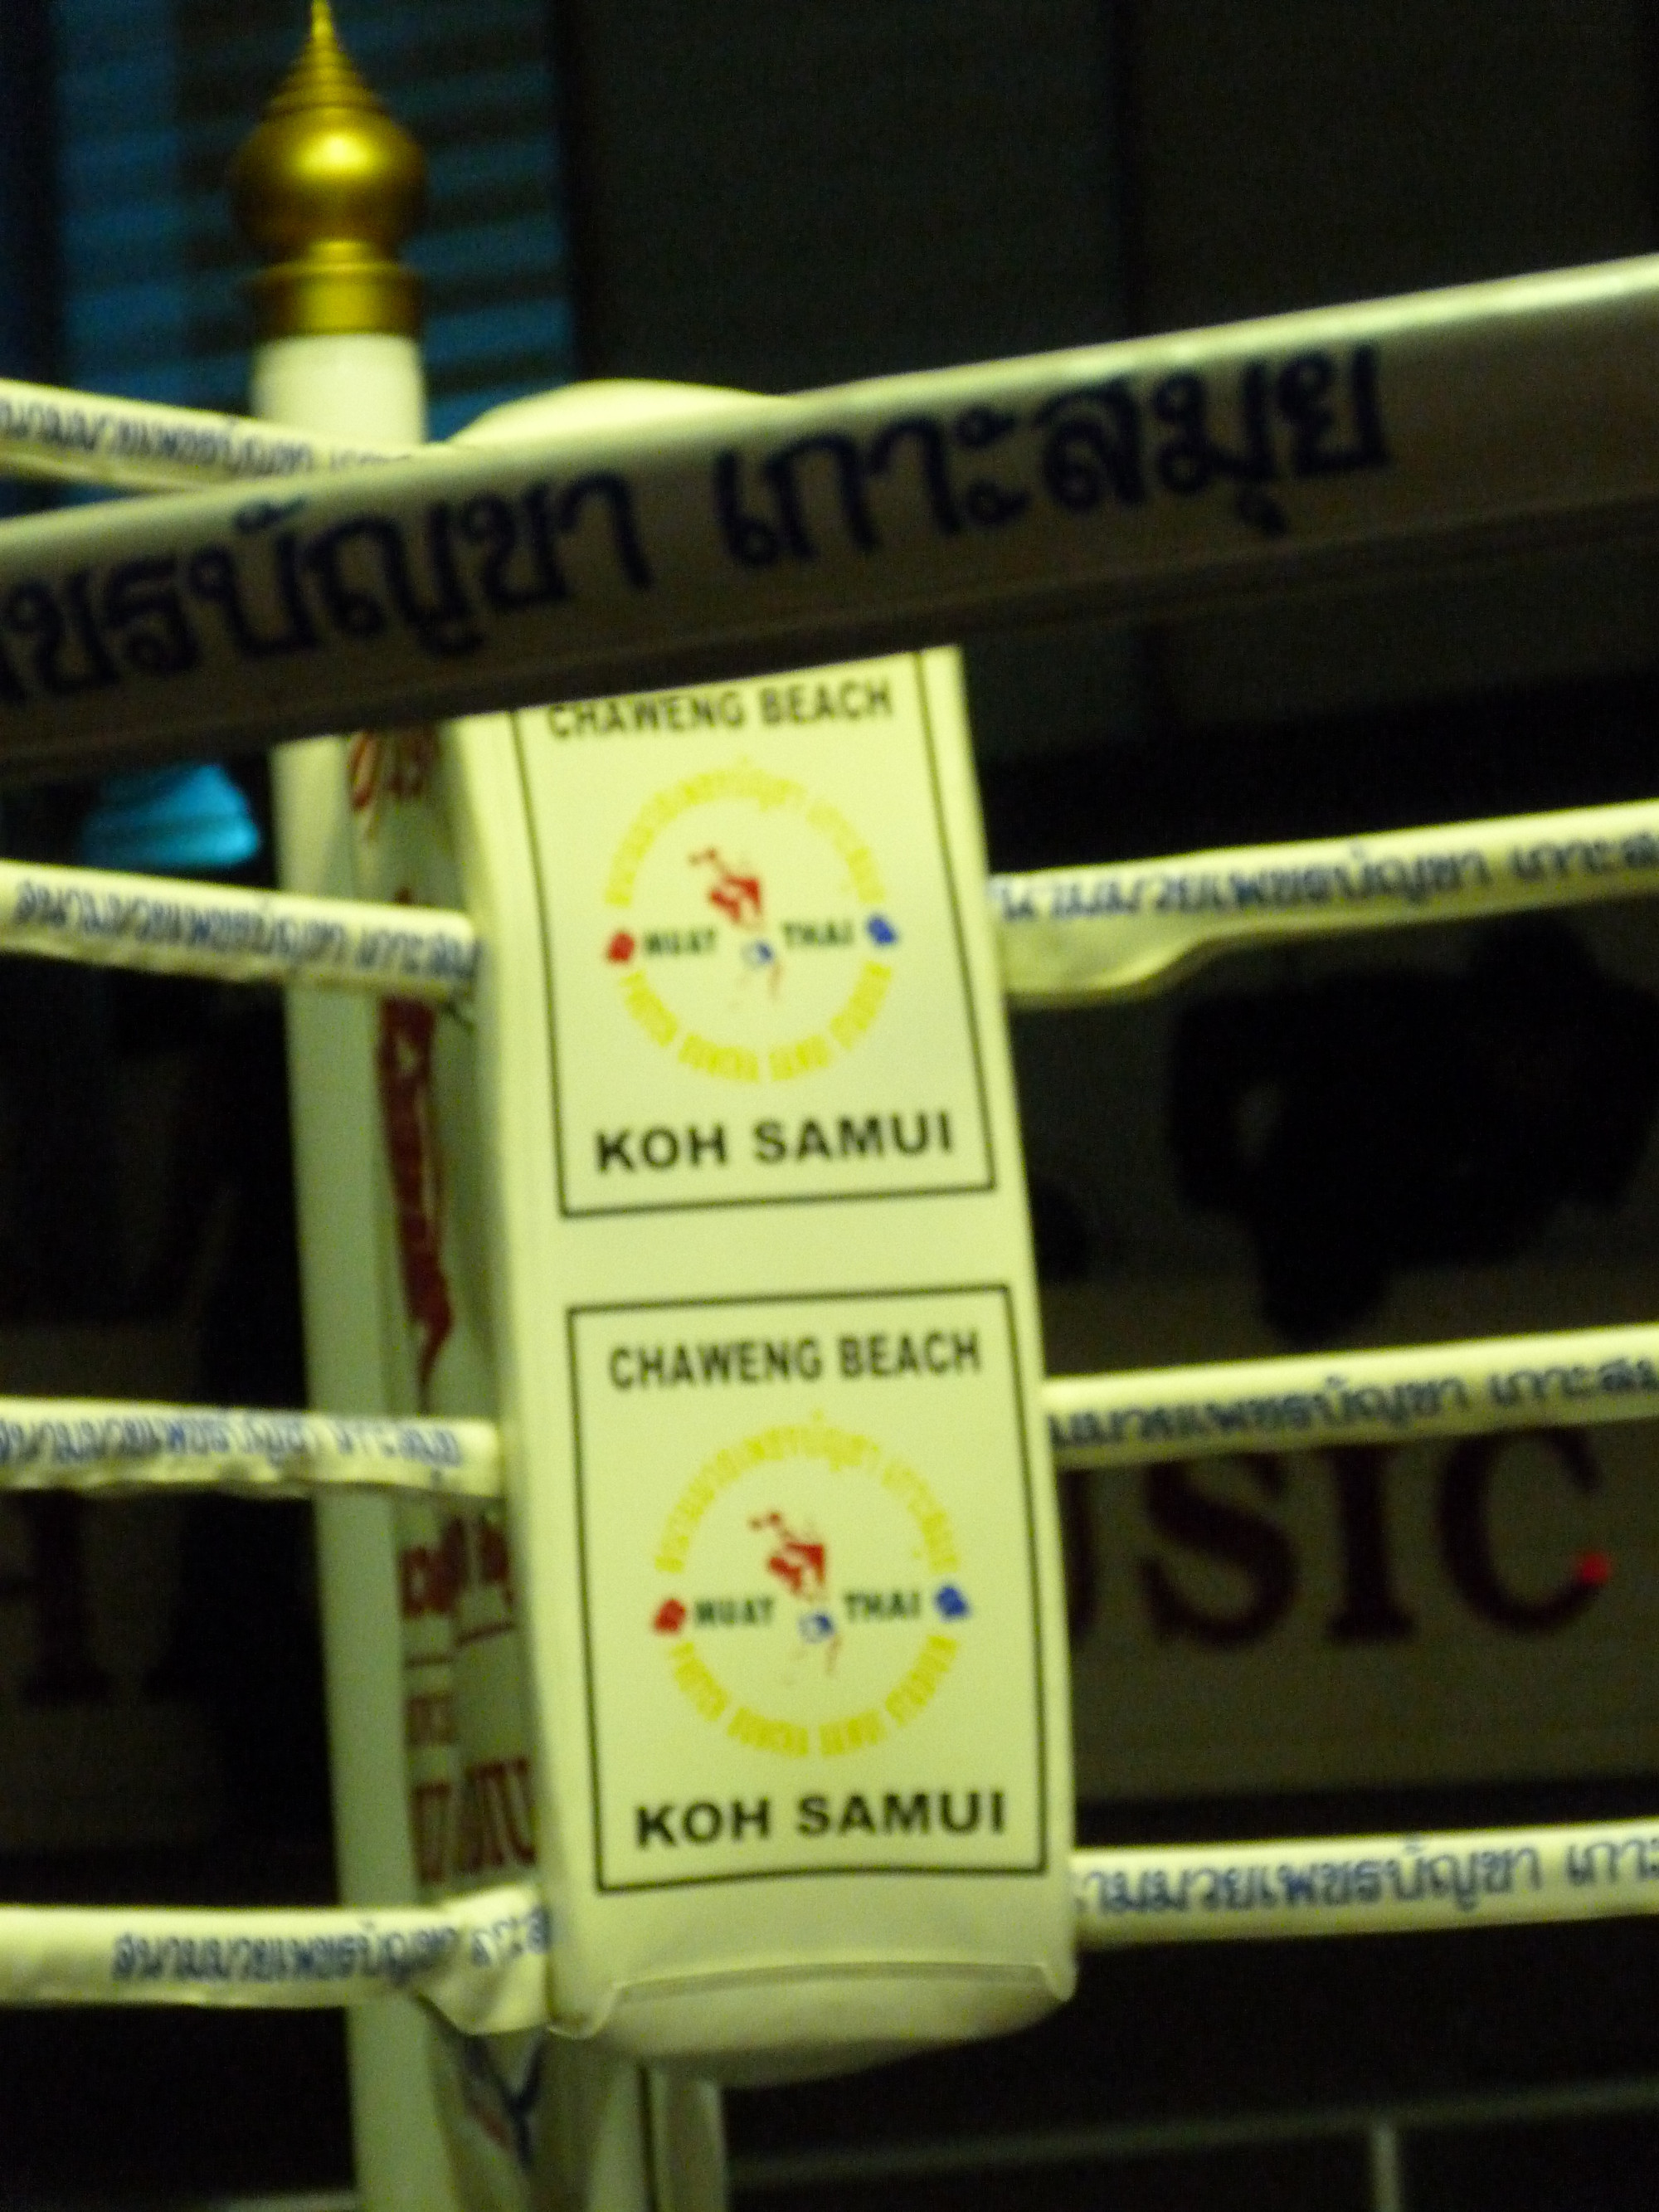 Phetch Buncha Boxing Stadiu, Thailand